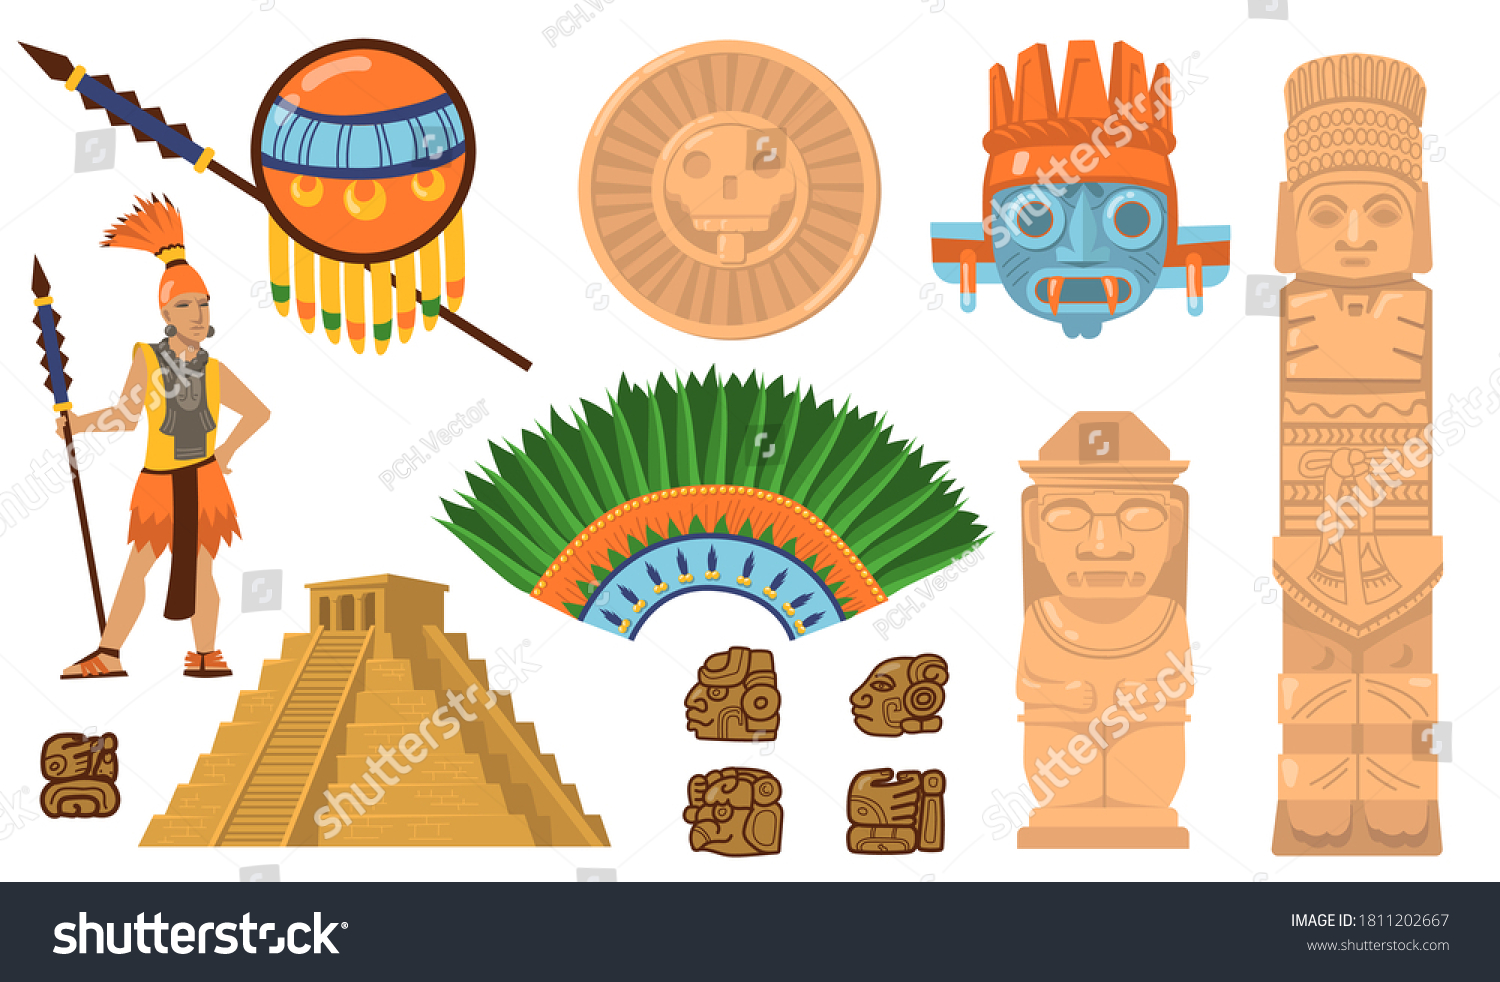 2,198 Mayan artifacts Images, Stock Photos & Vectors | Shutterstock